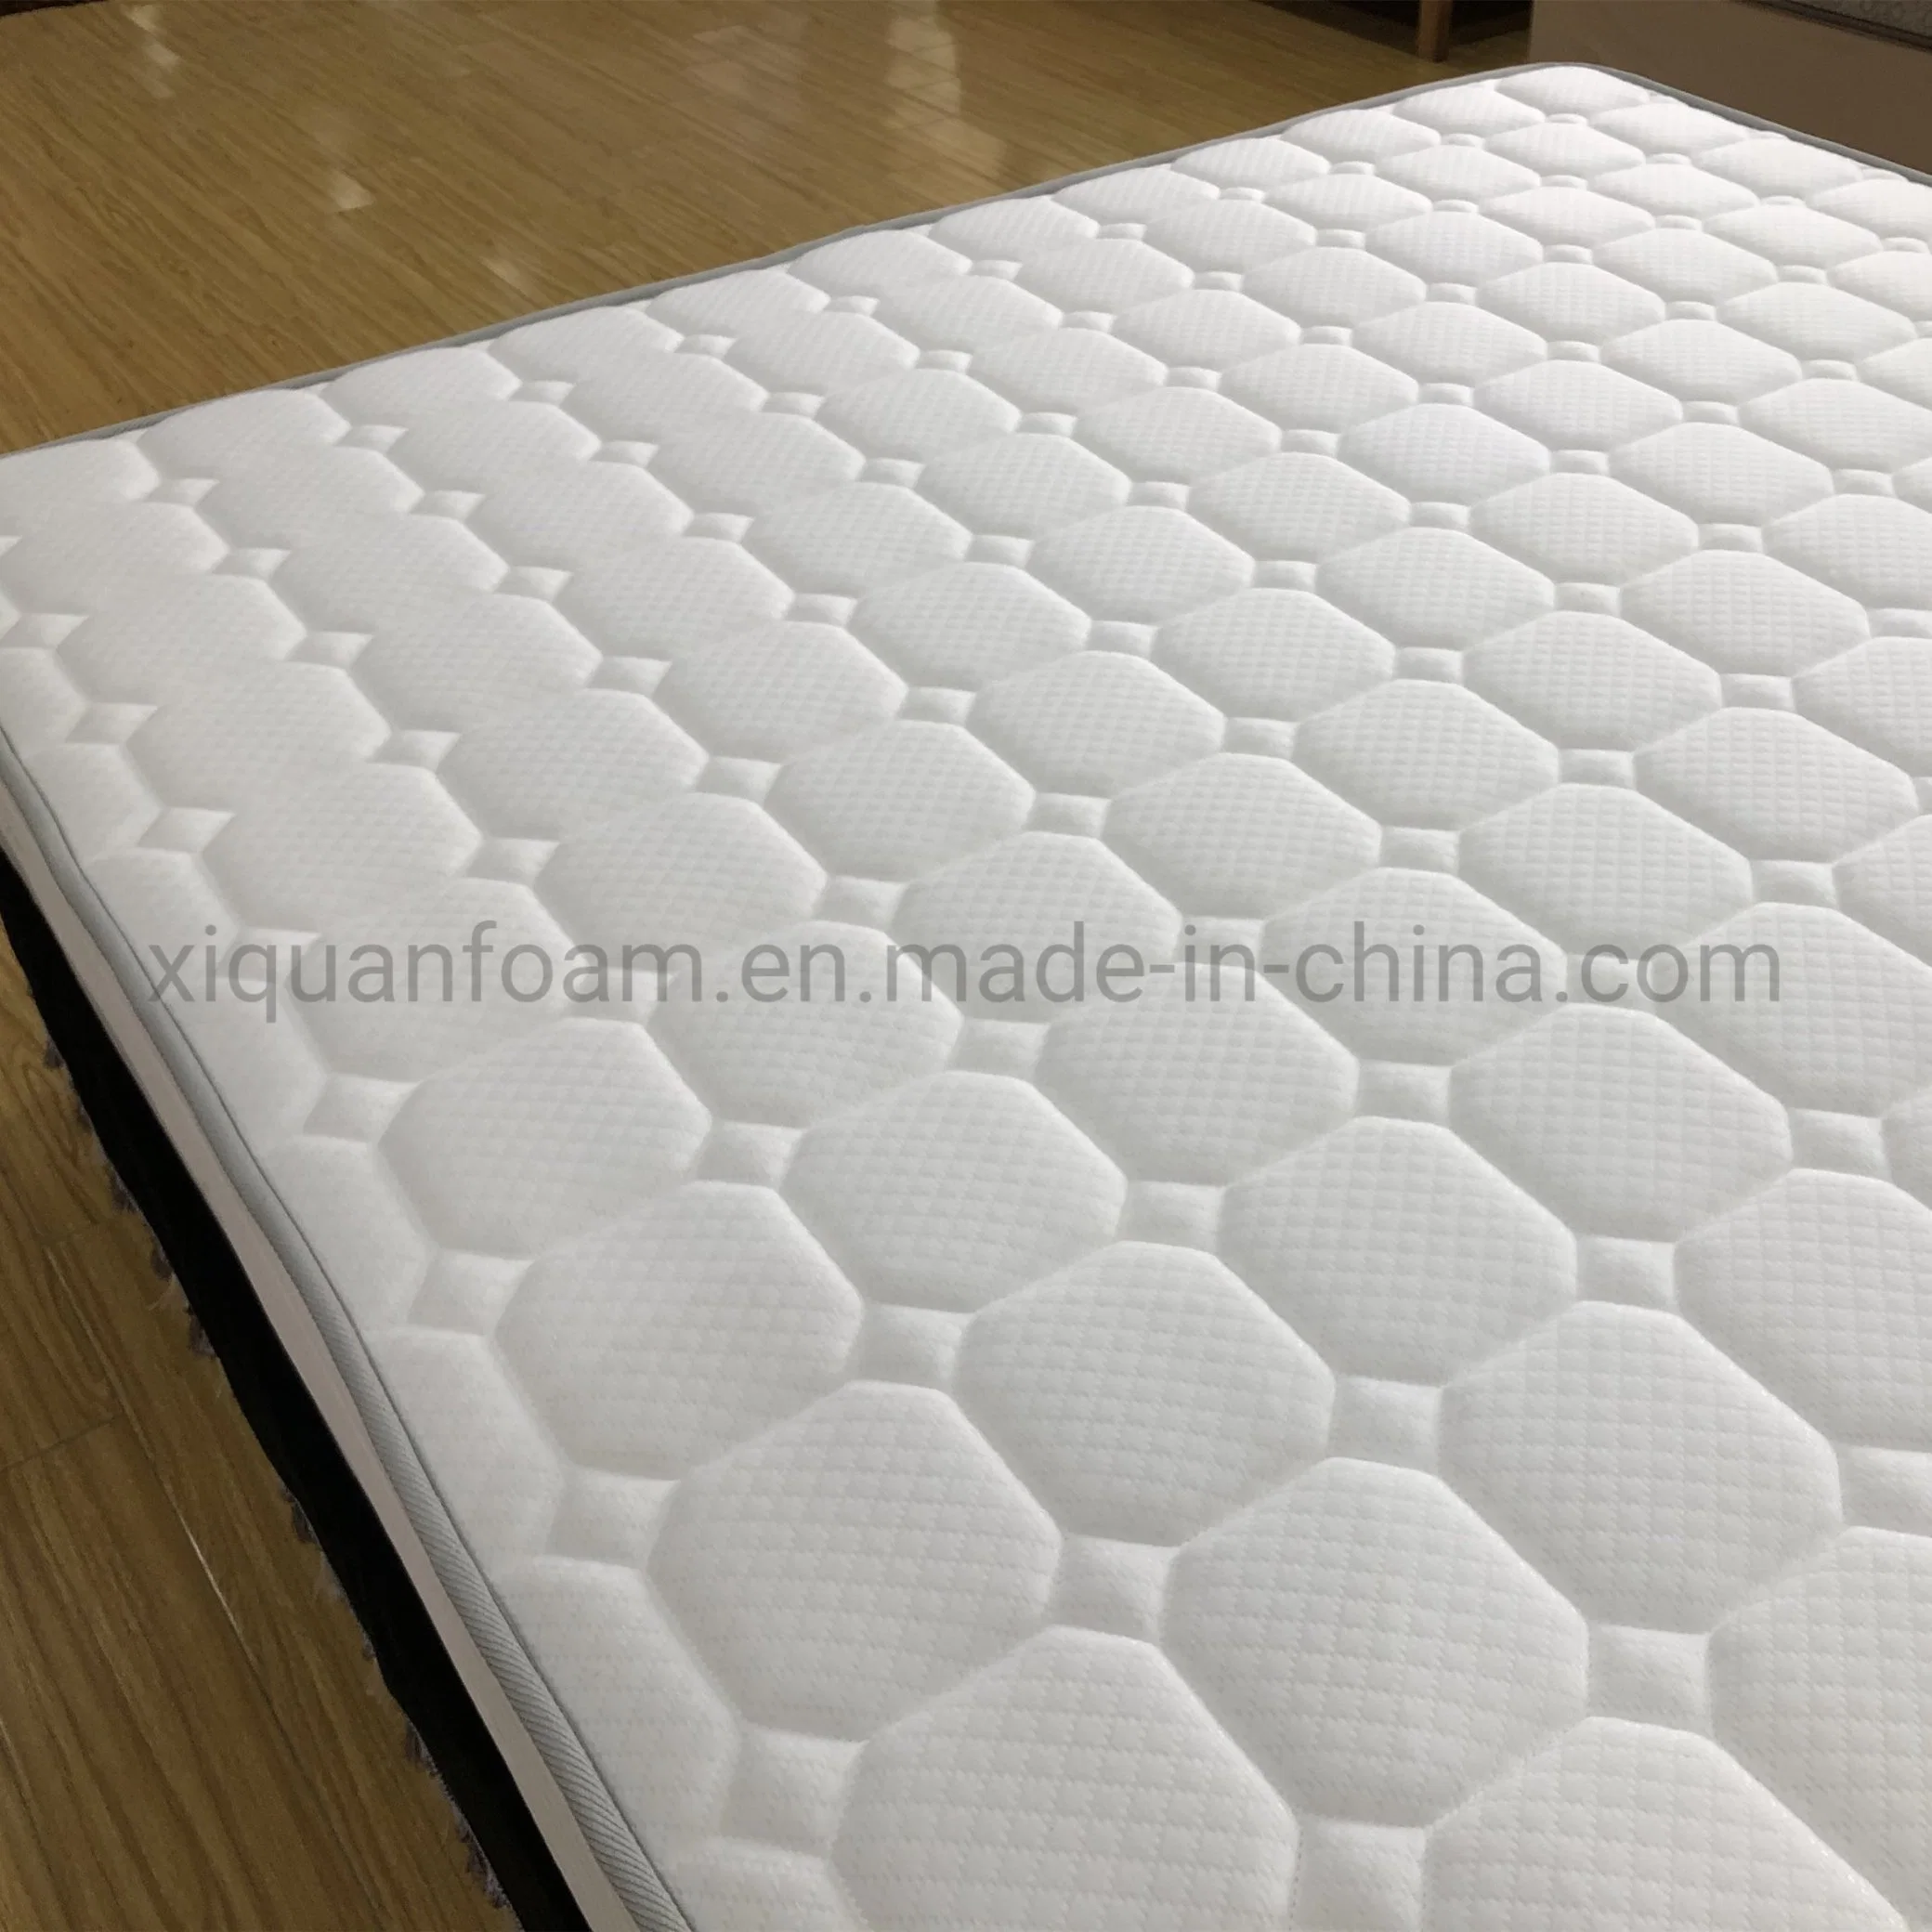 10inch Pocket Spring Matratze aufgerollt verpackt Bett Matratze